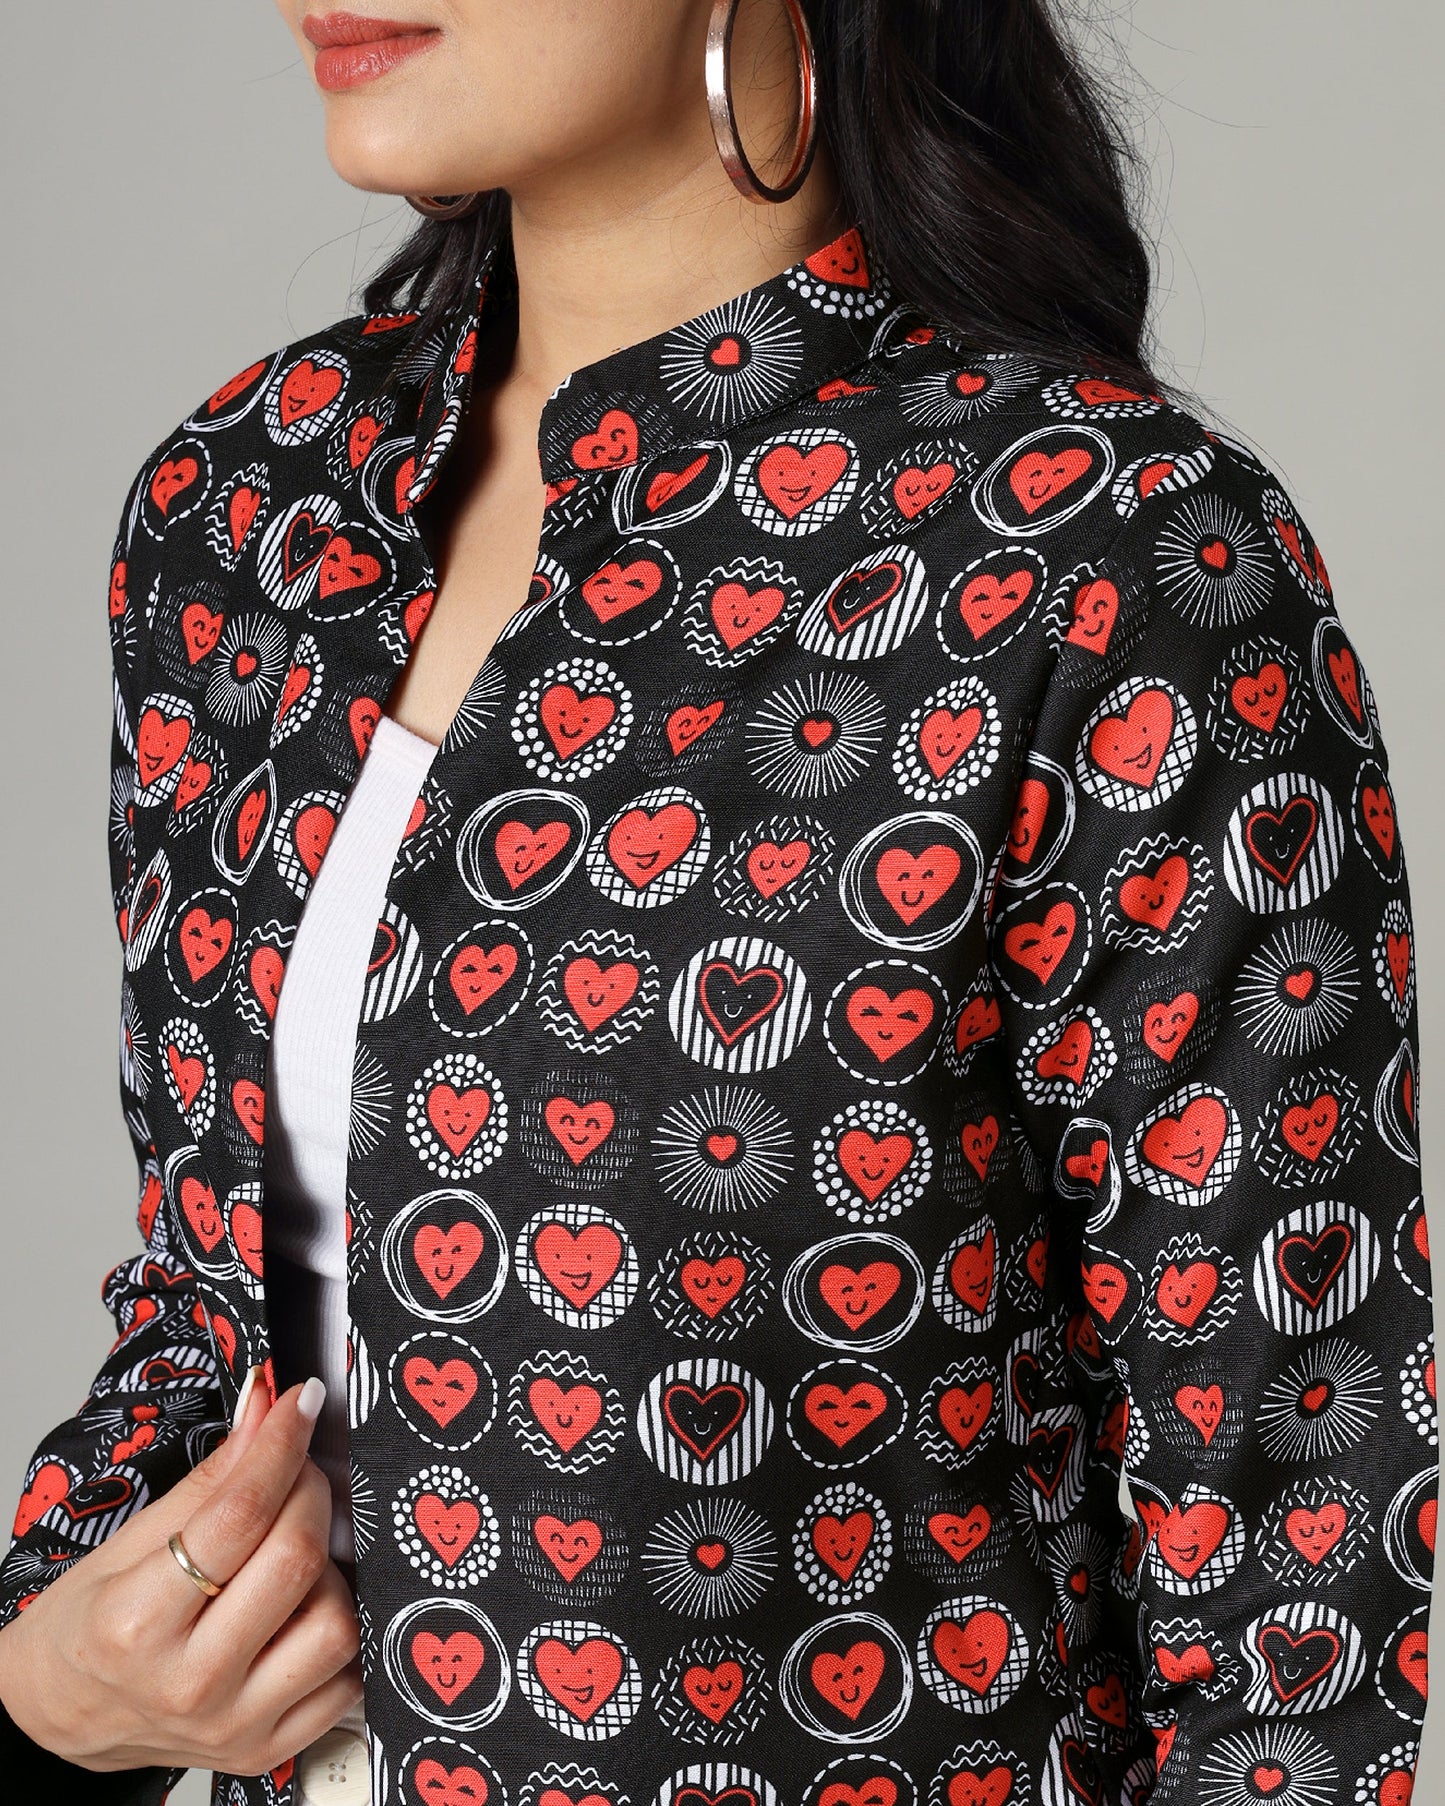 Enchanting Hearts on Women's Jacket